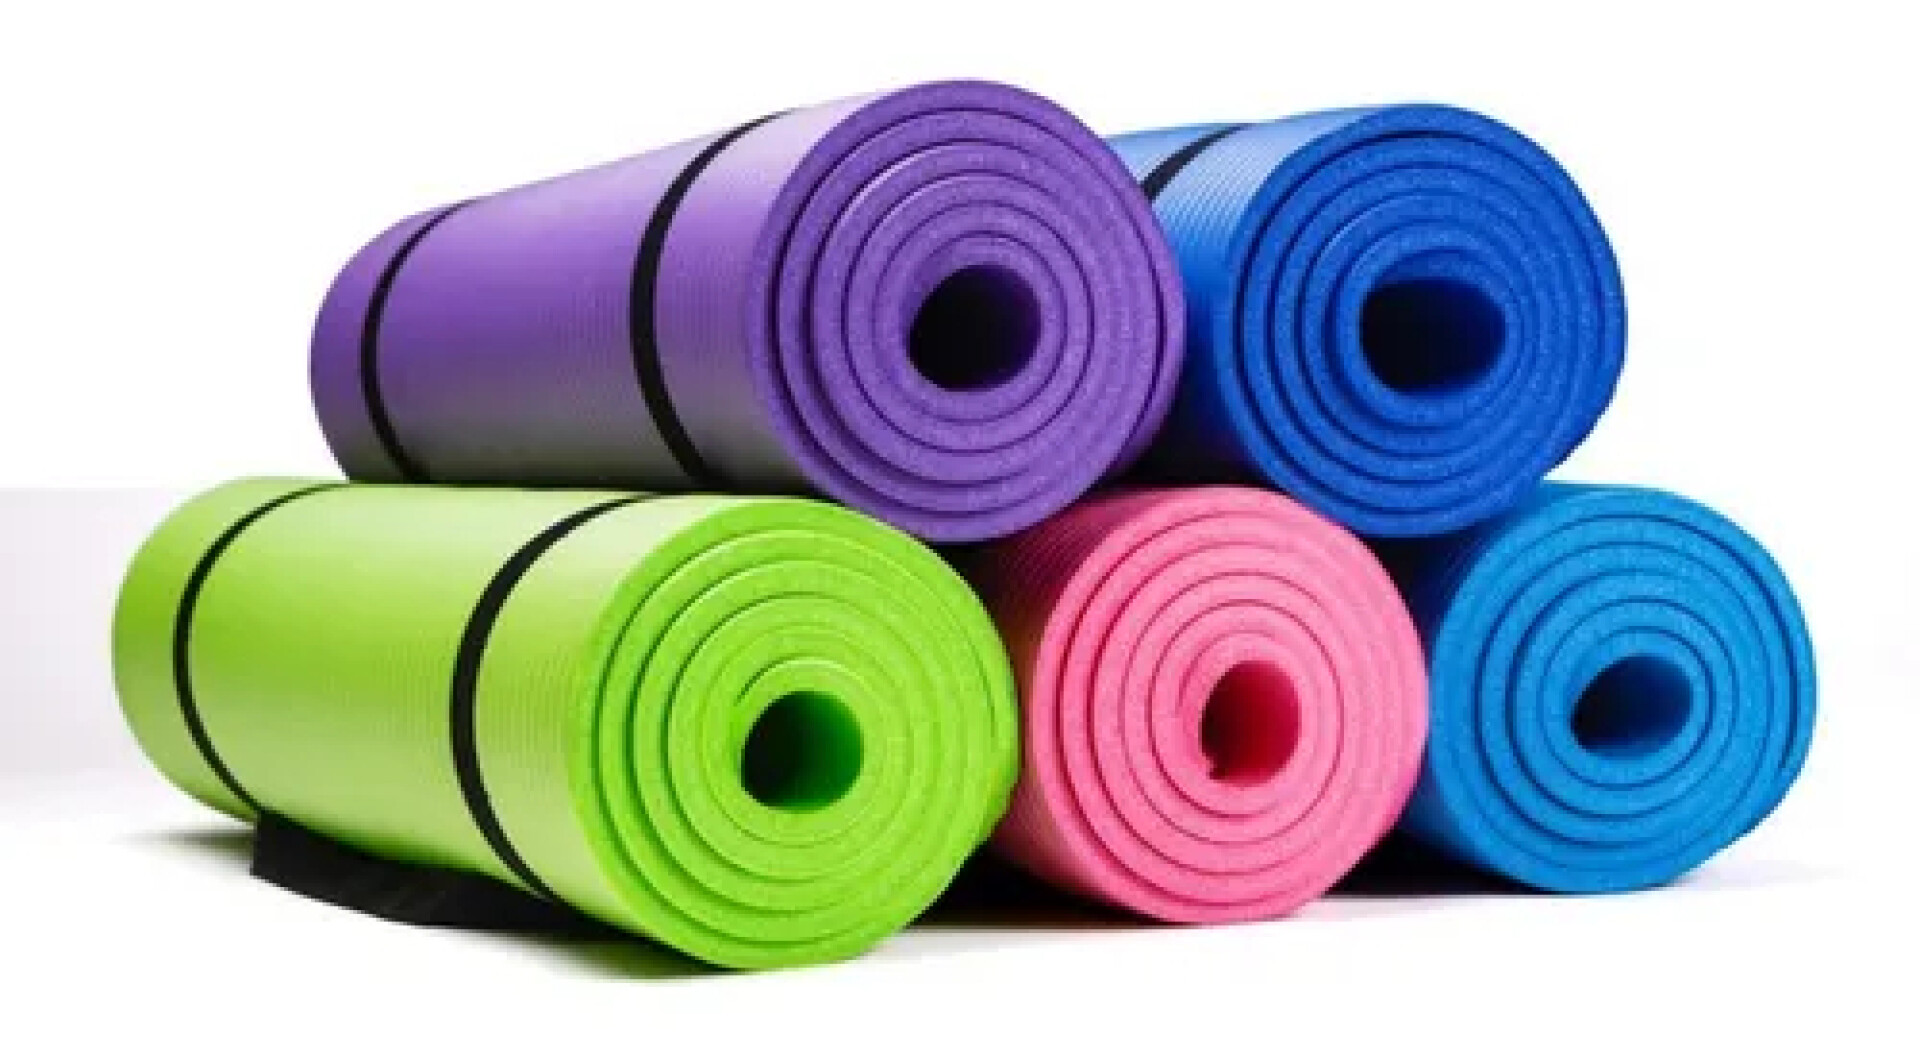 Colchoneta Yoga Mat 10mm Fitness Pilates 180x60 